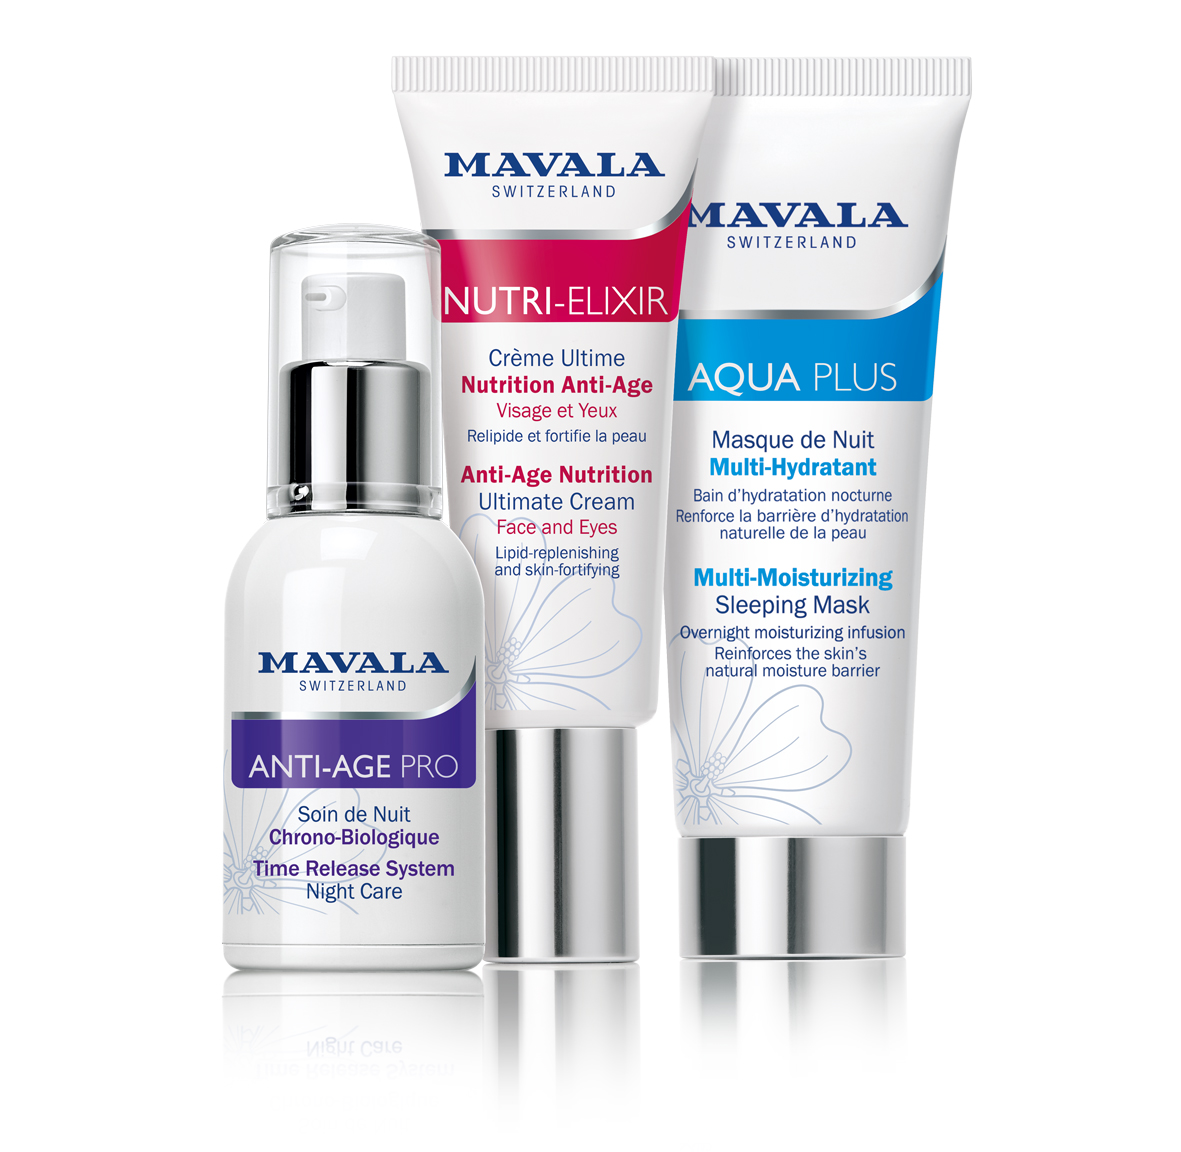 MAVALA-Swiss-Skin-Solution-packagings